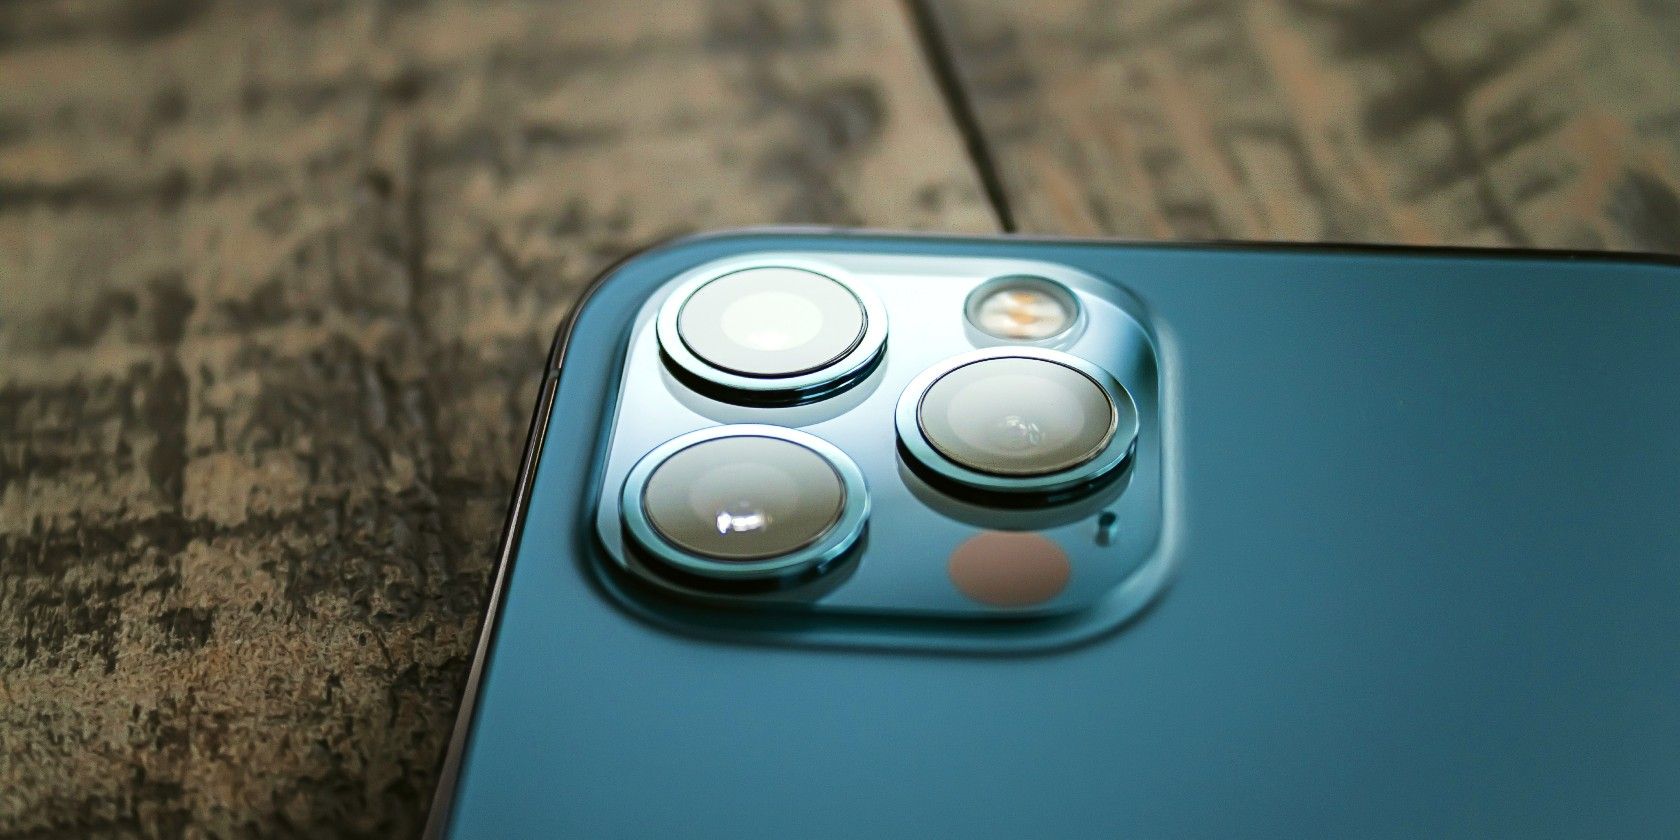 iphone-12-pro-camera-tof-lidar-feature